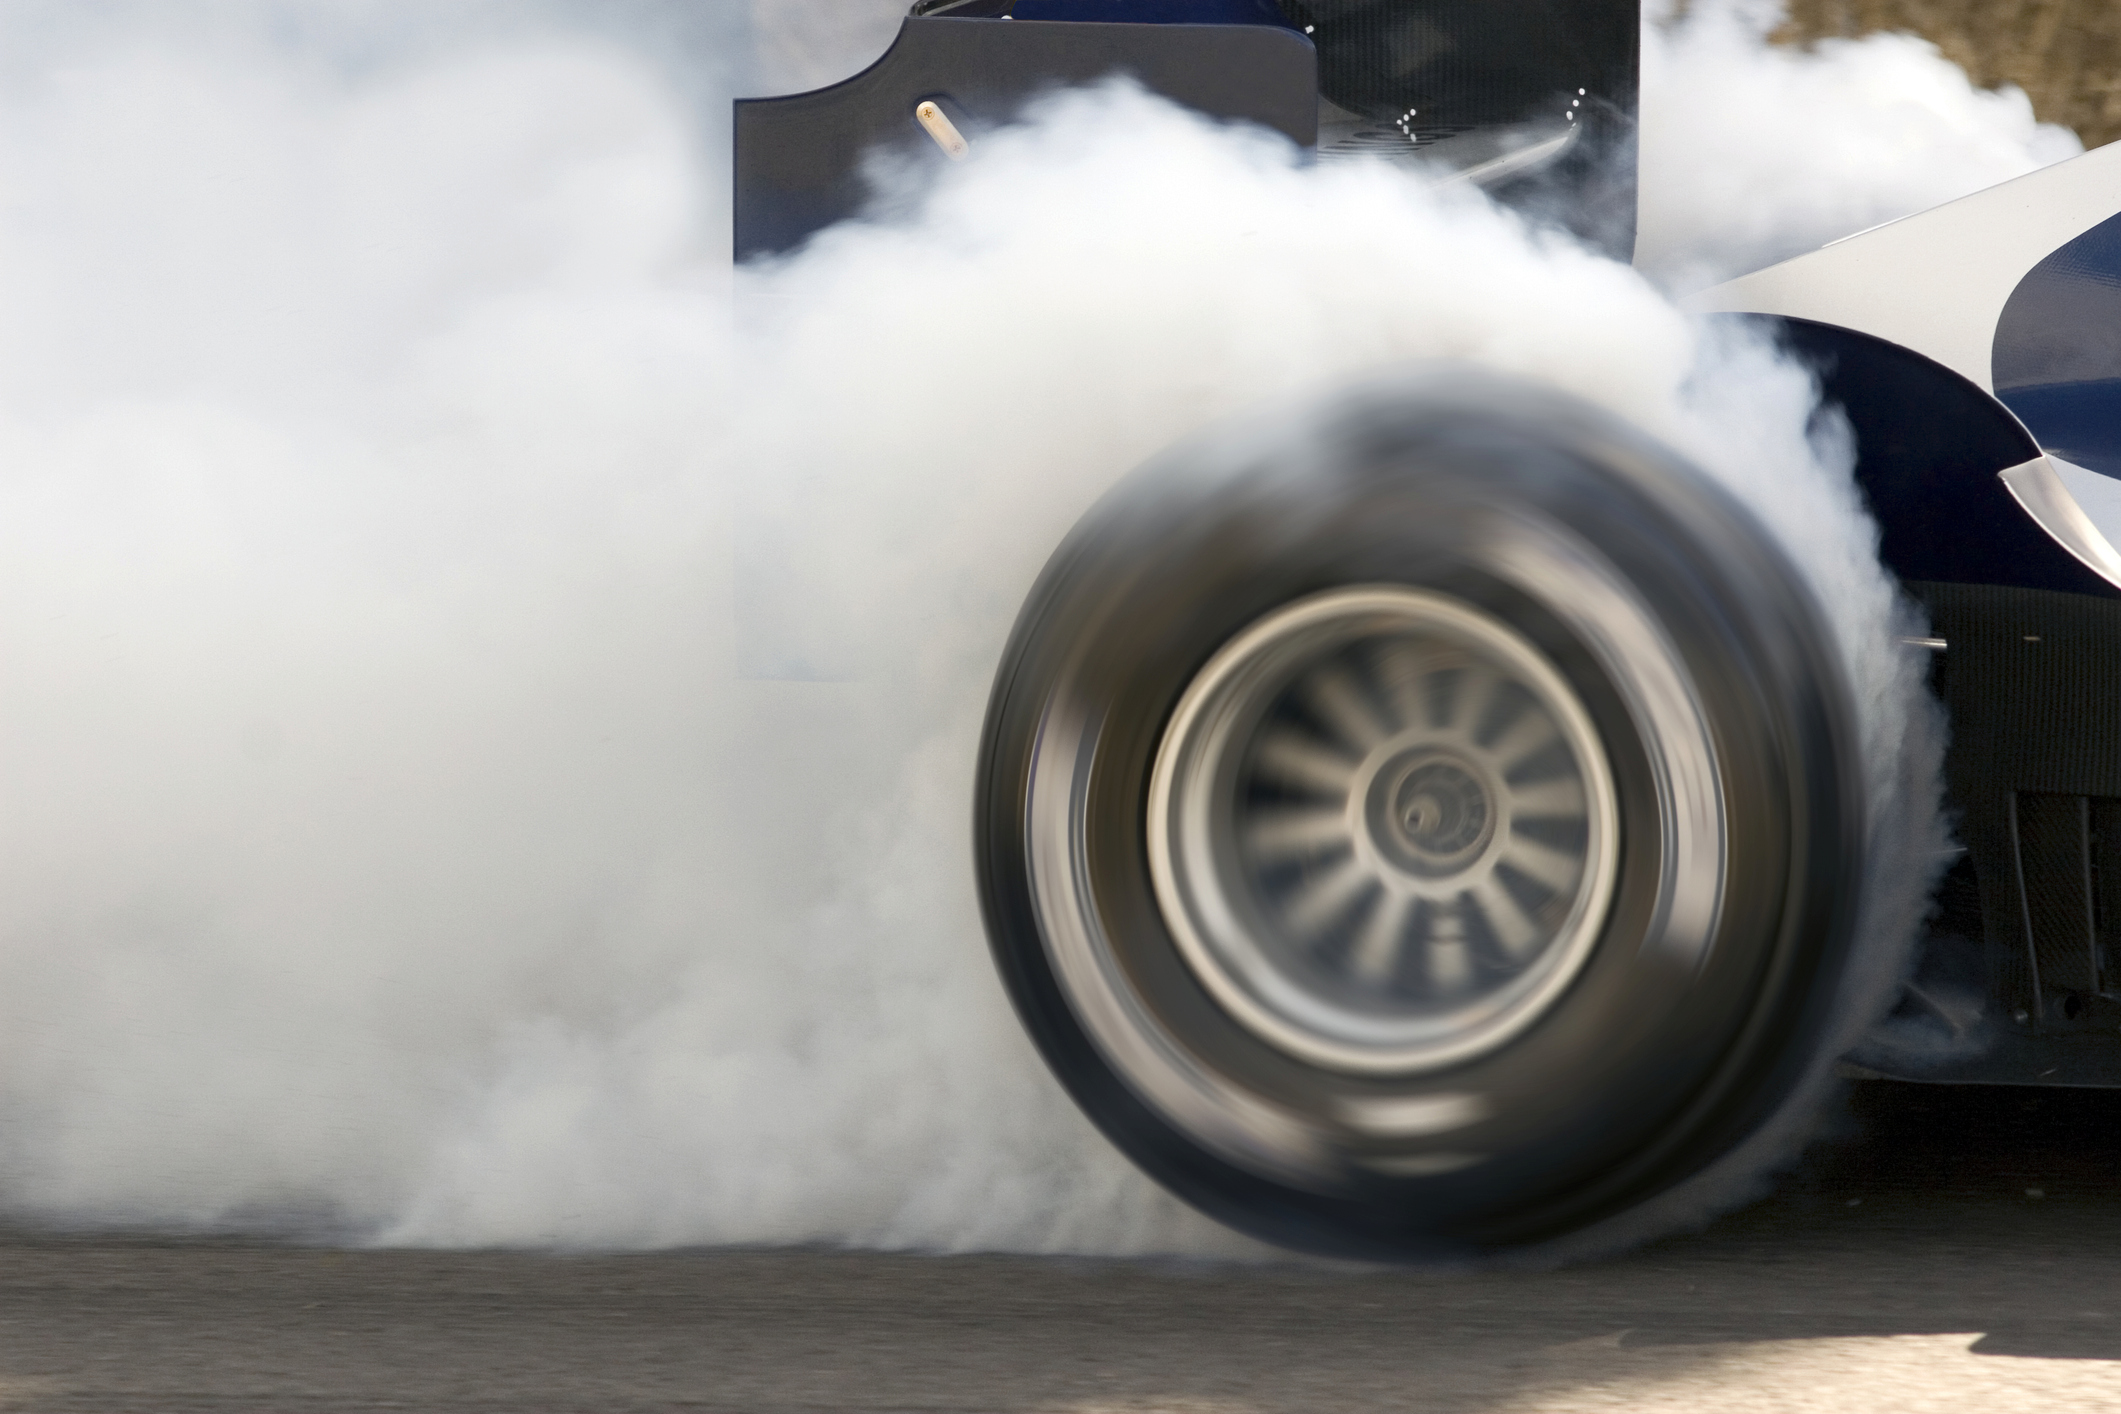 2006 Formula One Grand Prix car smoking its super slick tires. The Formula One Grand Prix car is engulfed in white smoke.